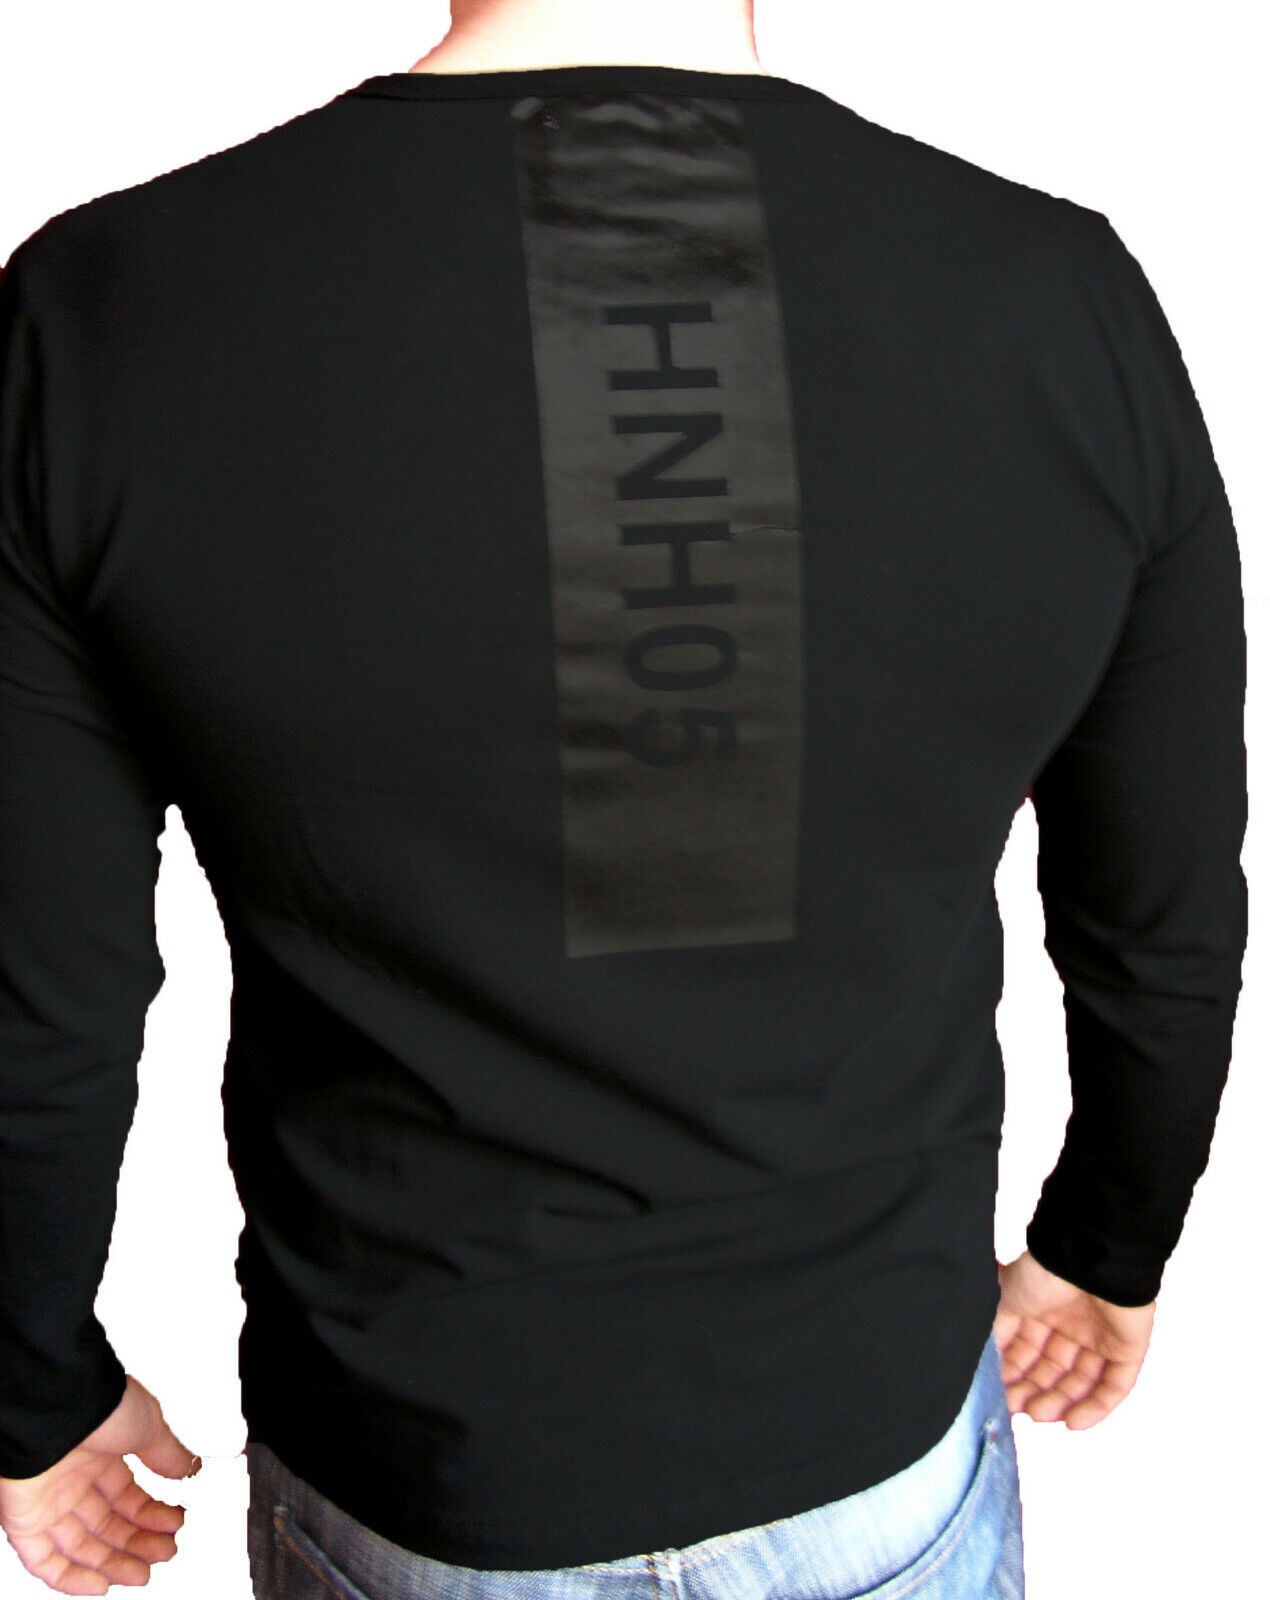 Emporio Armani Black Men's Long sleeve T-Shirt,Muscle fit,Size M*L*XL 7425 Emporio Armani 8N1T991JPZZ